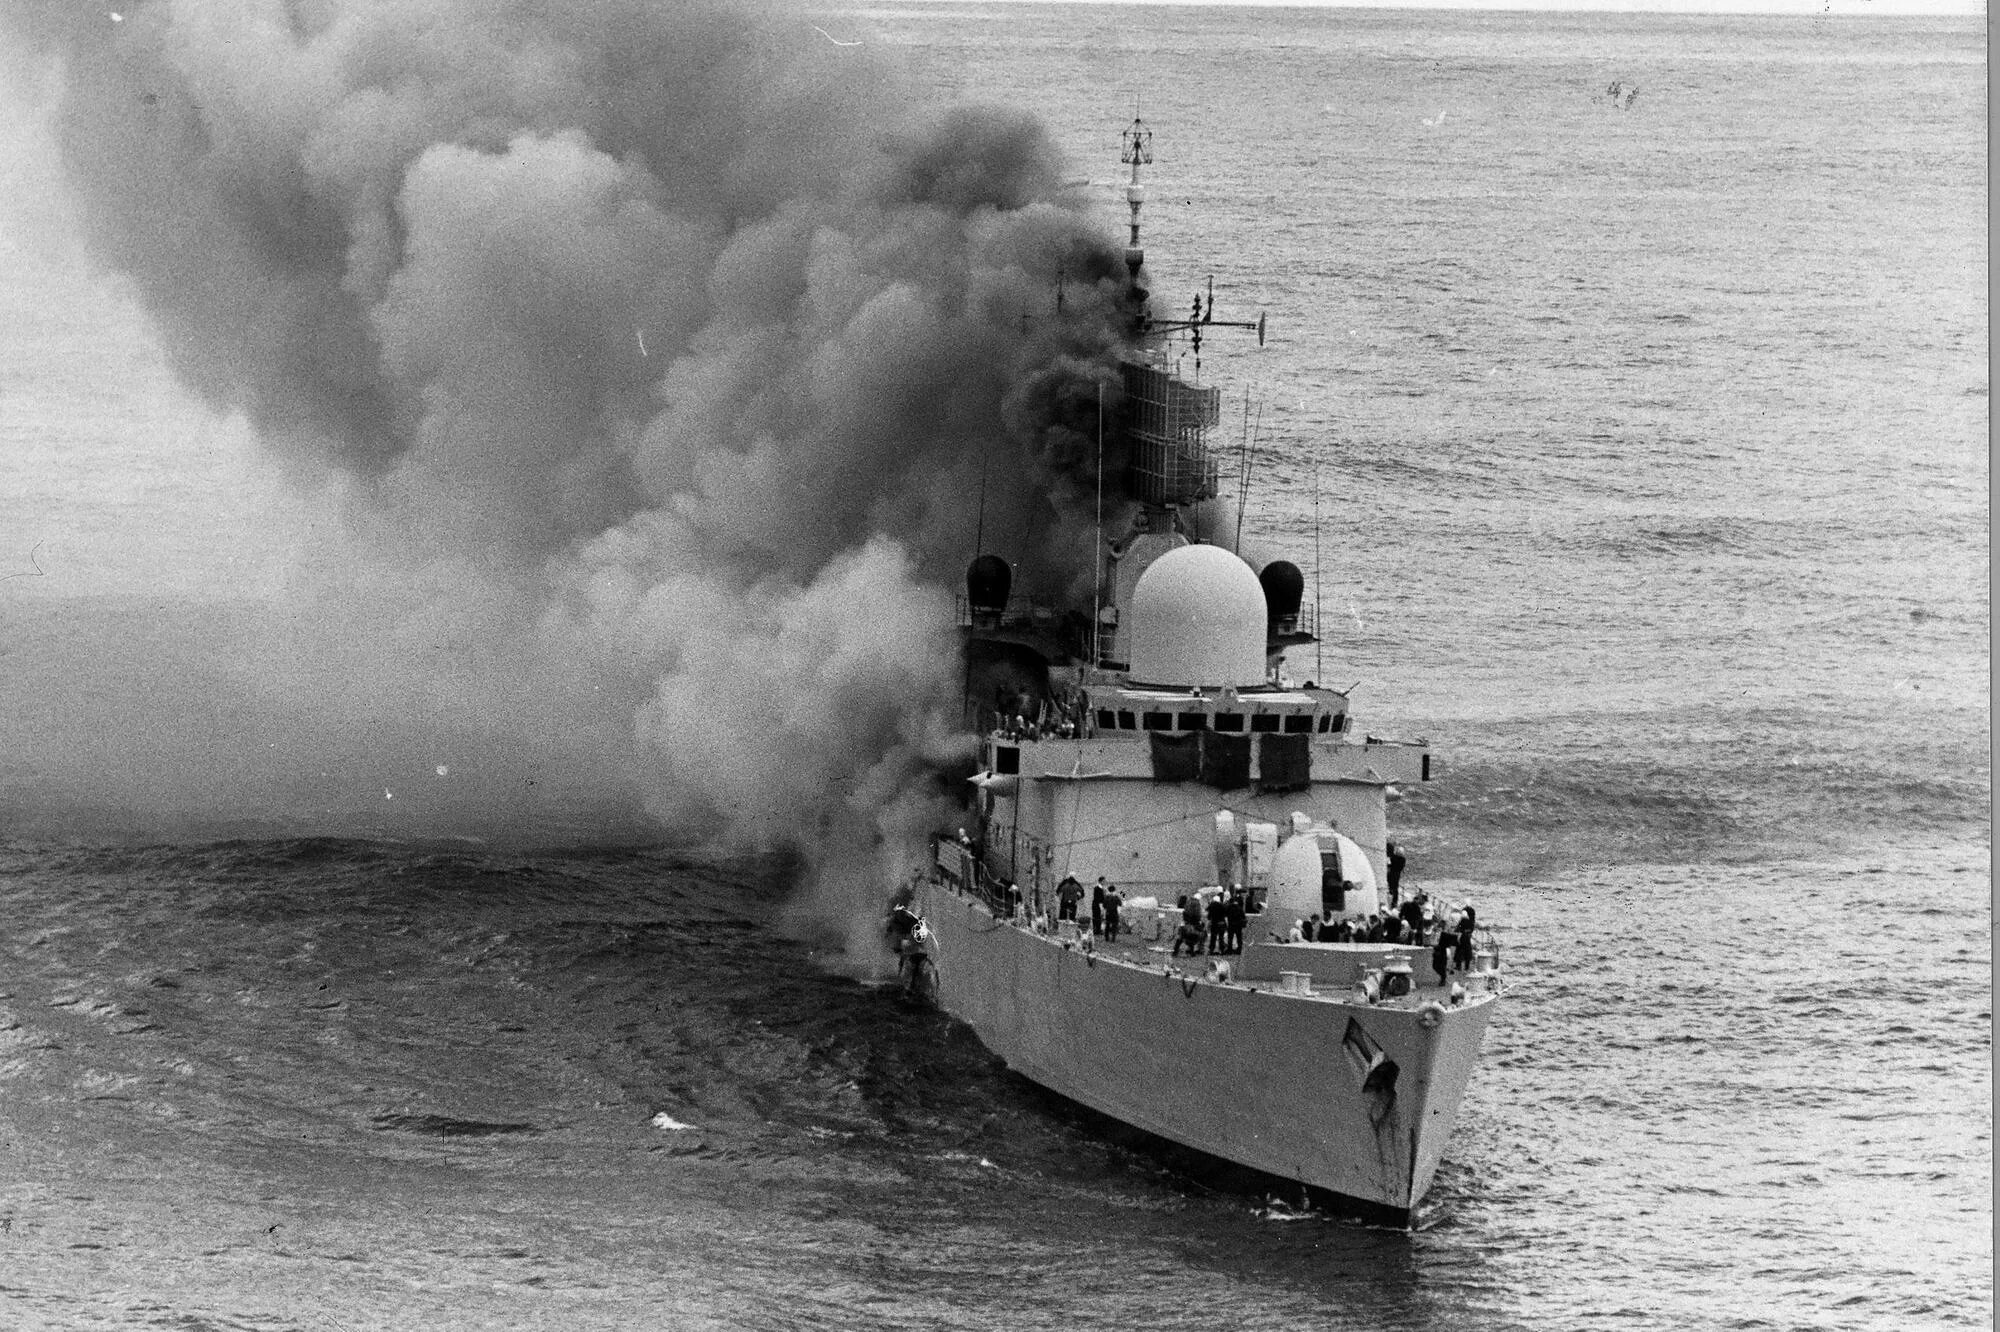 Uss stark. HMS Sheffield 1982. Эсминец Шеффилд 1982. Попадание ПКР В корабль. Затонувший эсминец «Шеффилд».